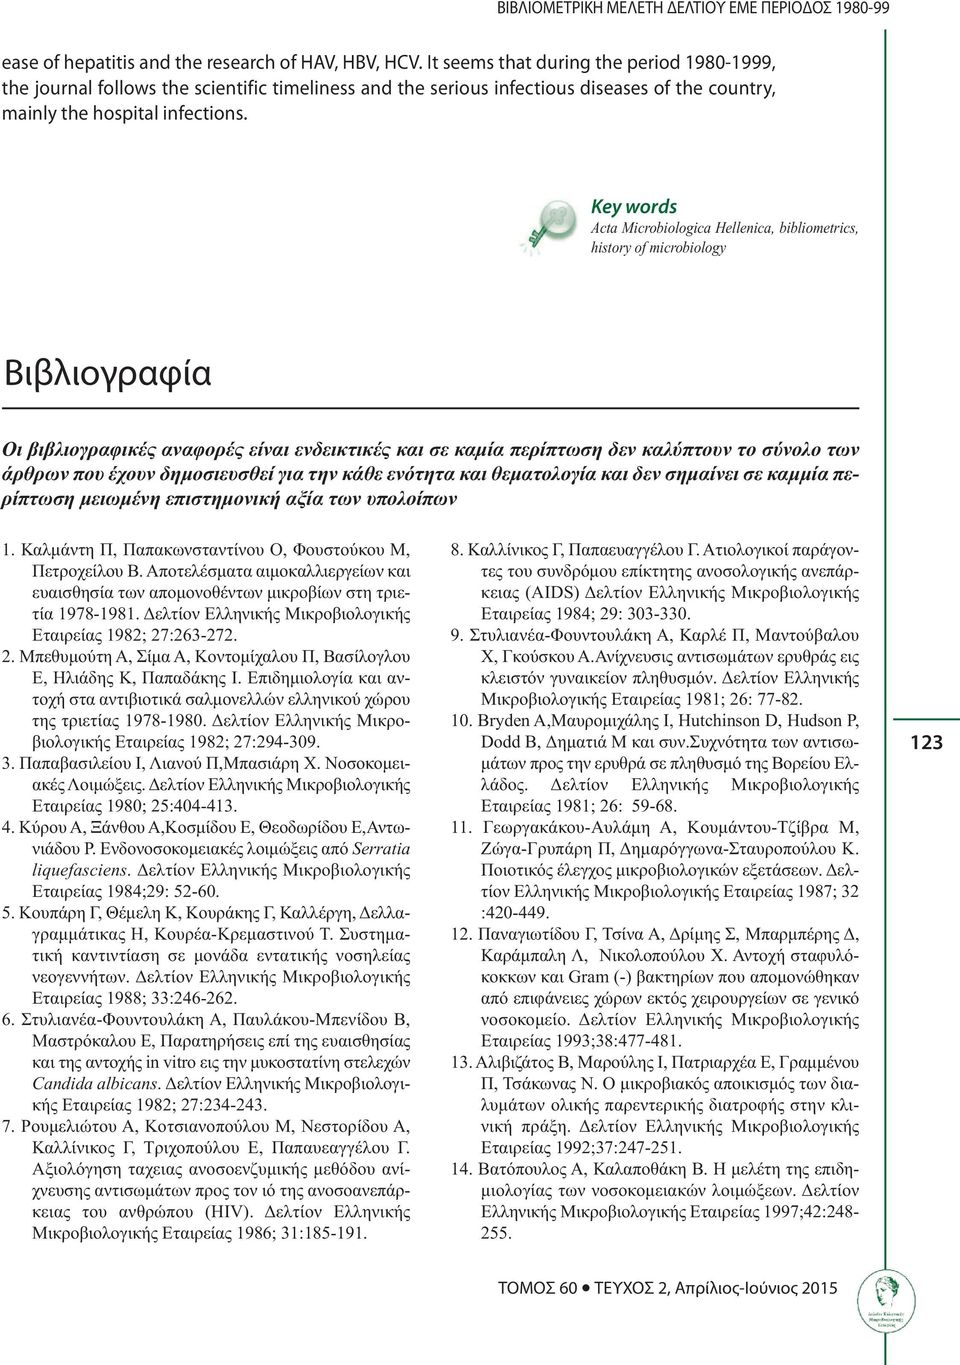 Key words Acta Microbiologica Hellenica, bibliometrics, history of microbiology Βιβλιογραφία Οι βιβλιογραφικές αναφορές είναι ενδεικτικές και σε καμία περίπτωση δεν καλύπτουν το σύνολο των άρθρων που